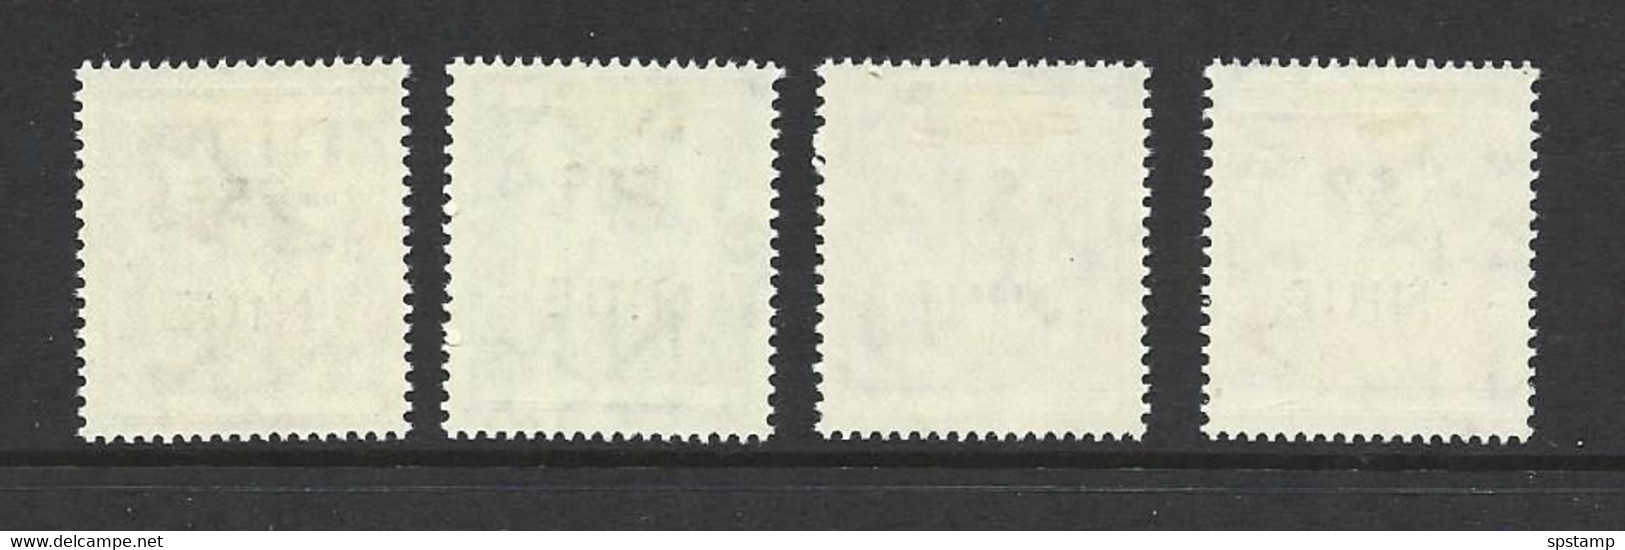 Niue 1967 Overprints On NZ Arms 25c - $2 Perf 14 Set Of 4 MLH - Niue